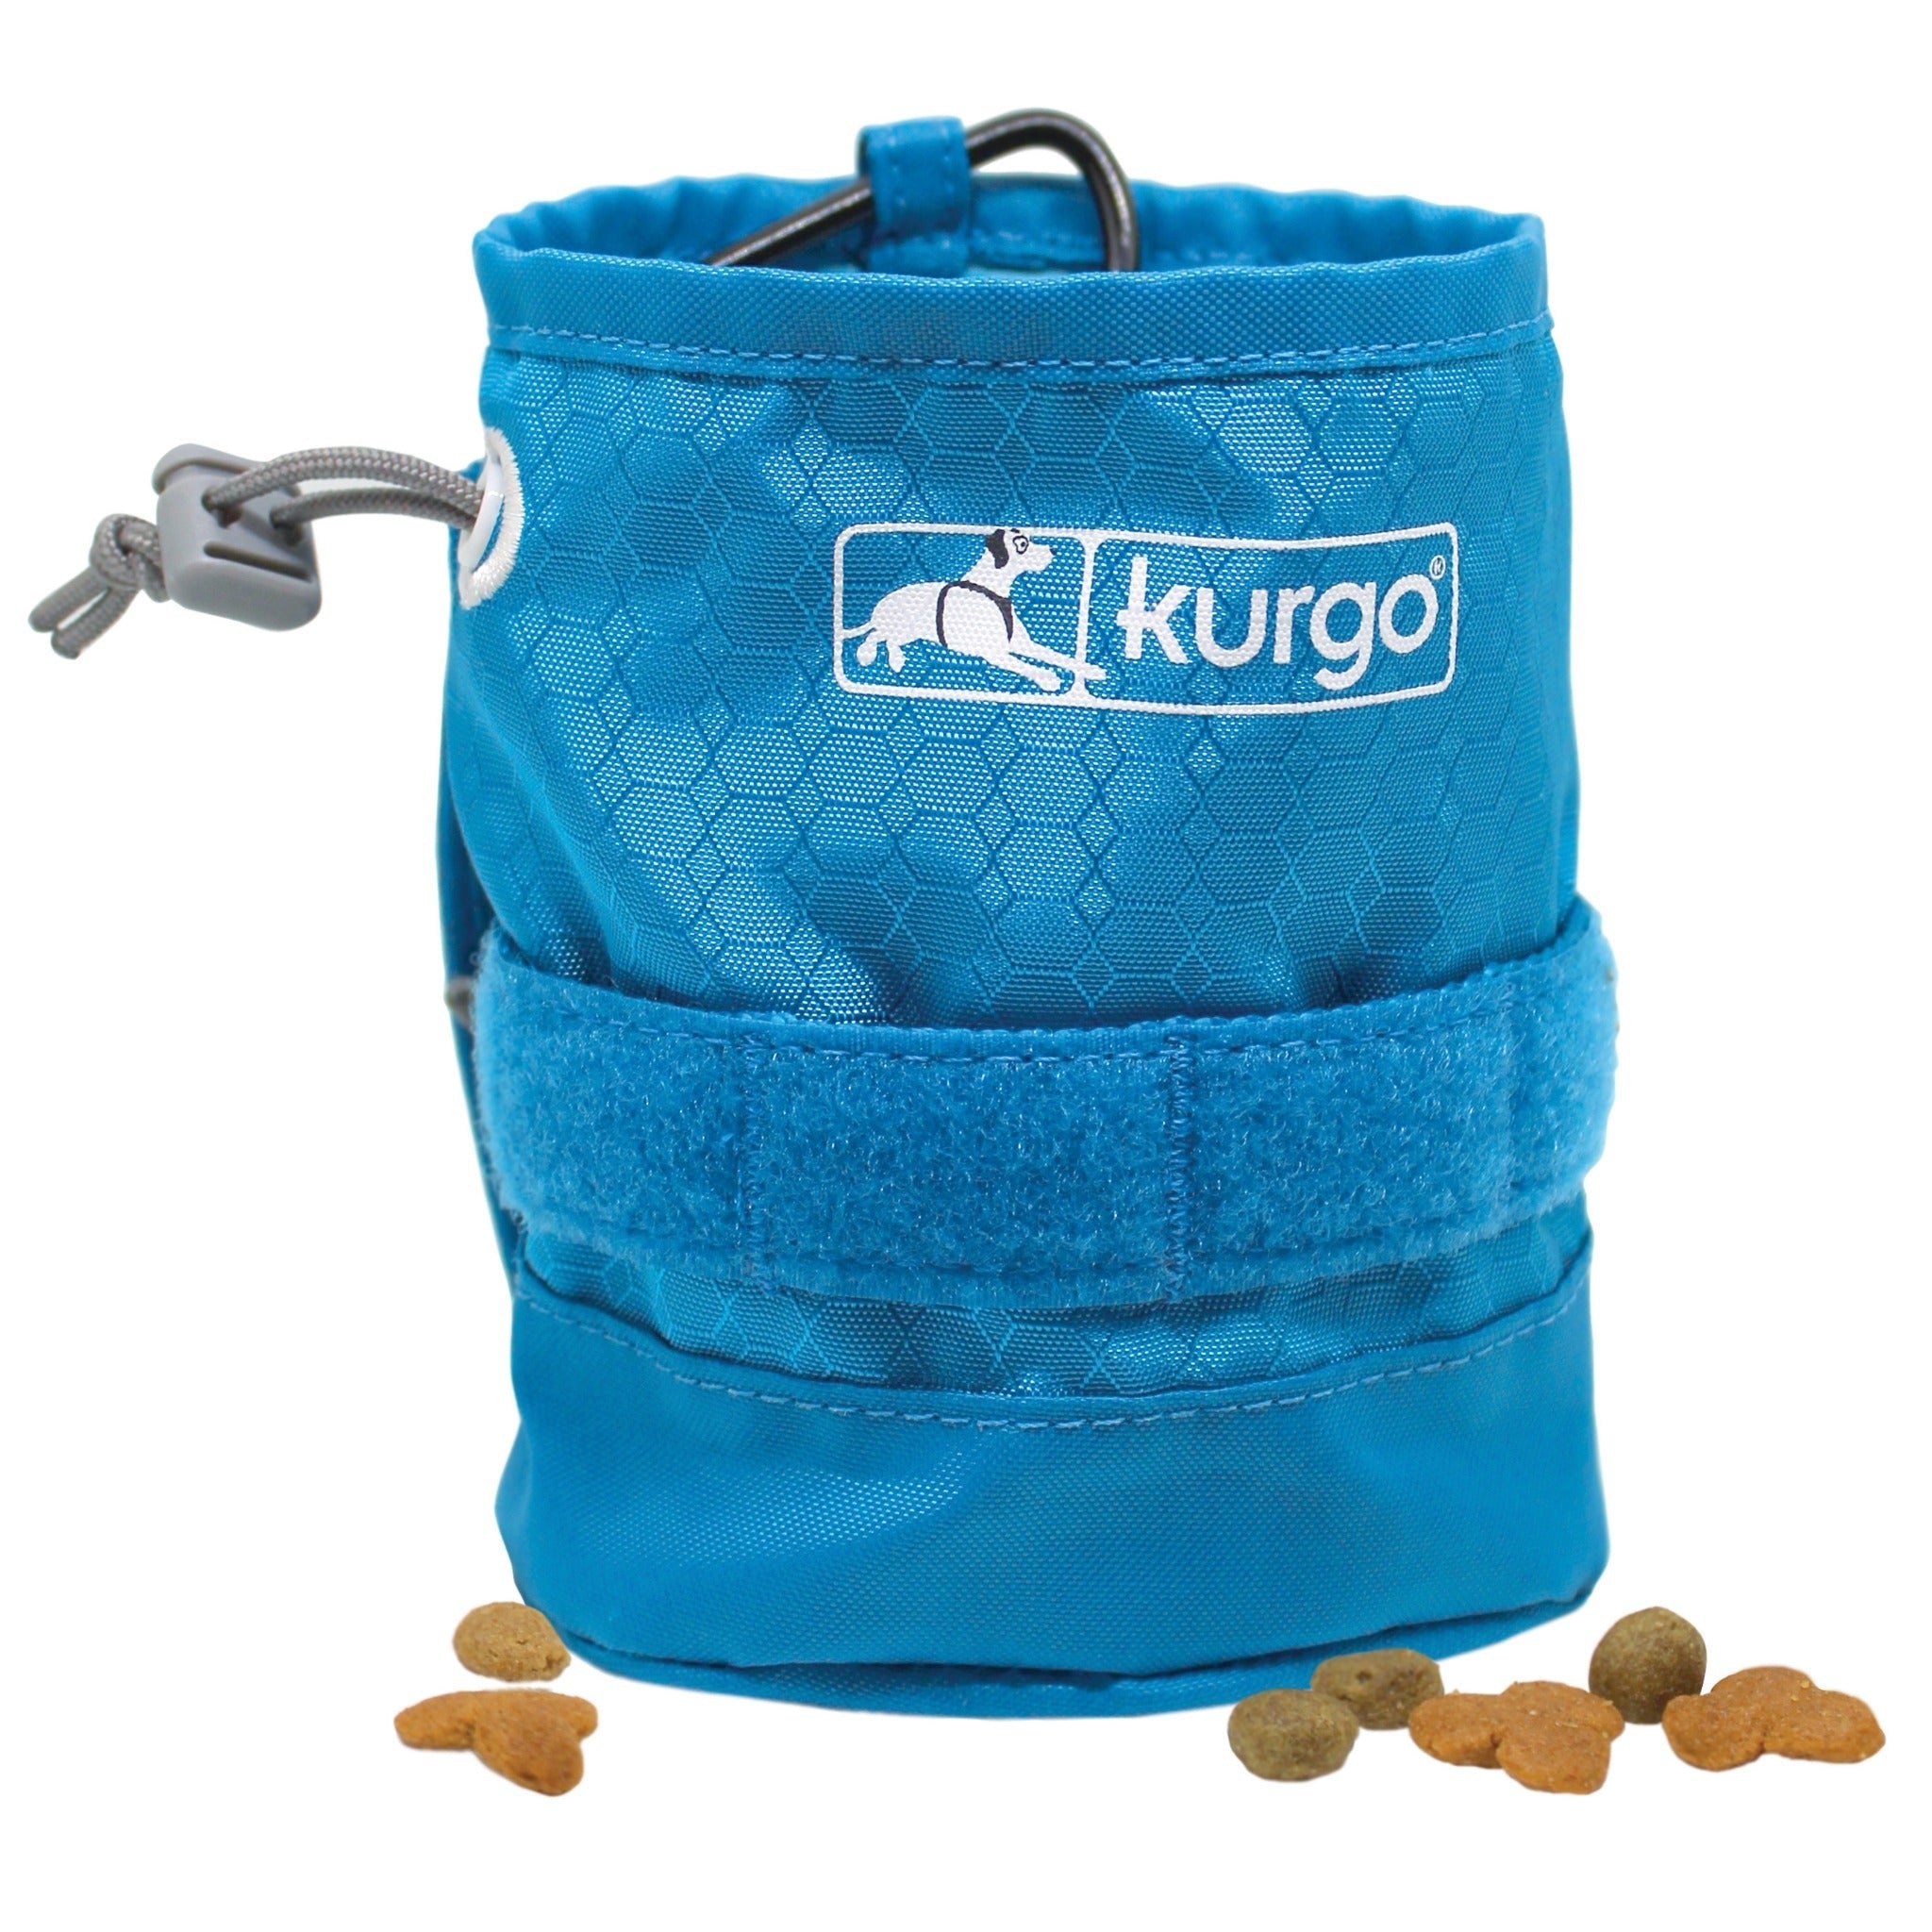 Kurgo Go Stuff It Dog Treat Bag, Red